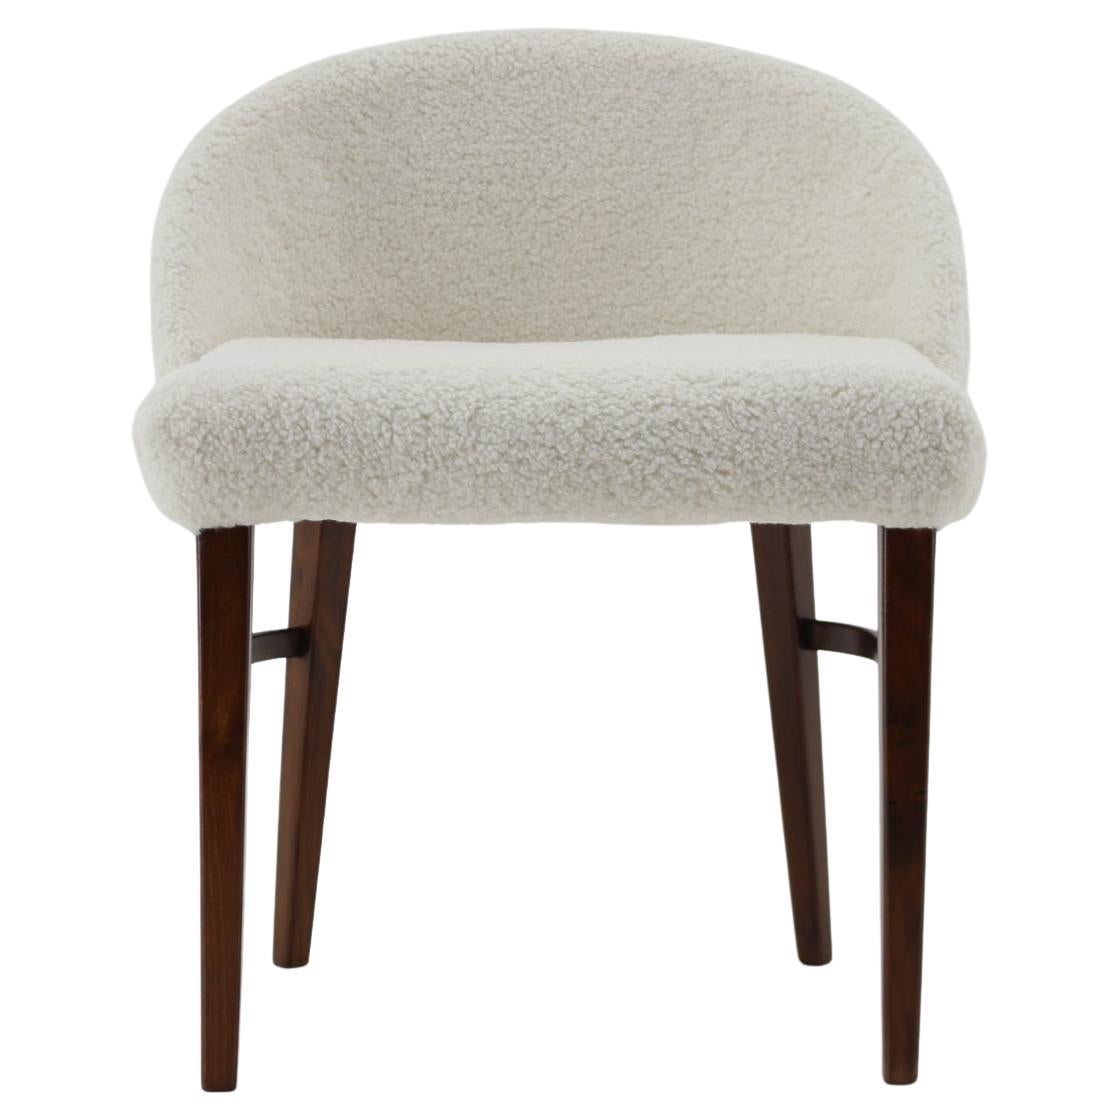 1960s Design Beech Chair in Sheepskin Fabric, Denmark For Sale